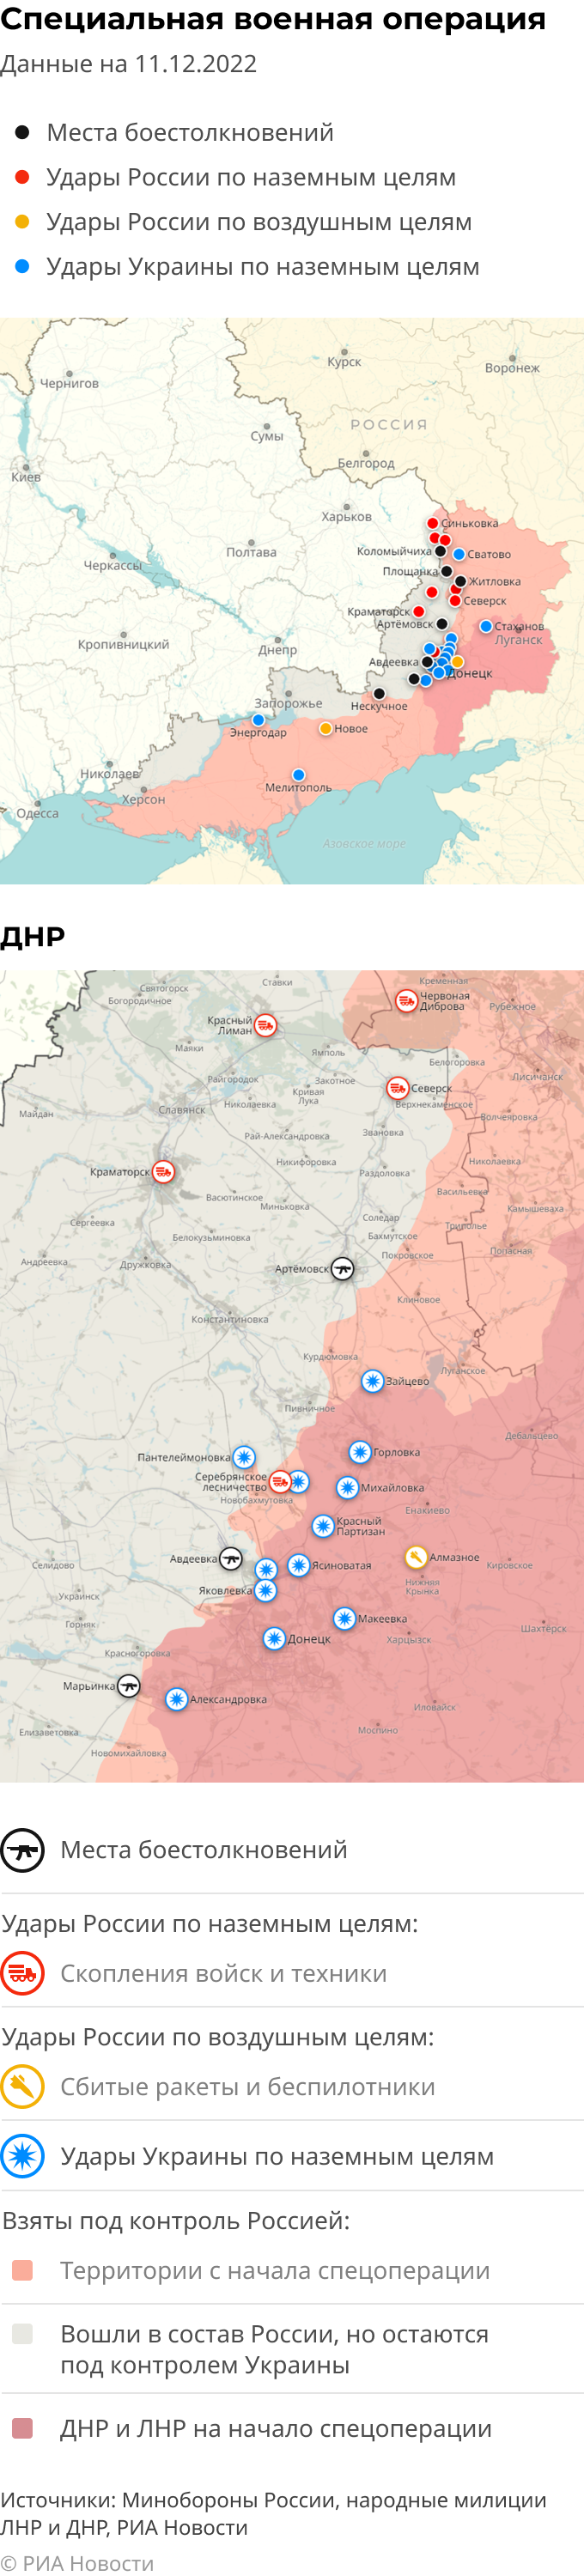 Карта спецоперации на украине мэш